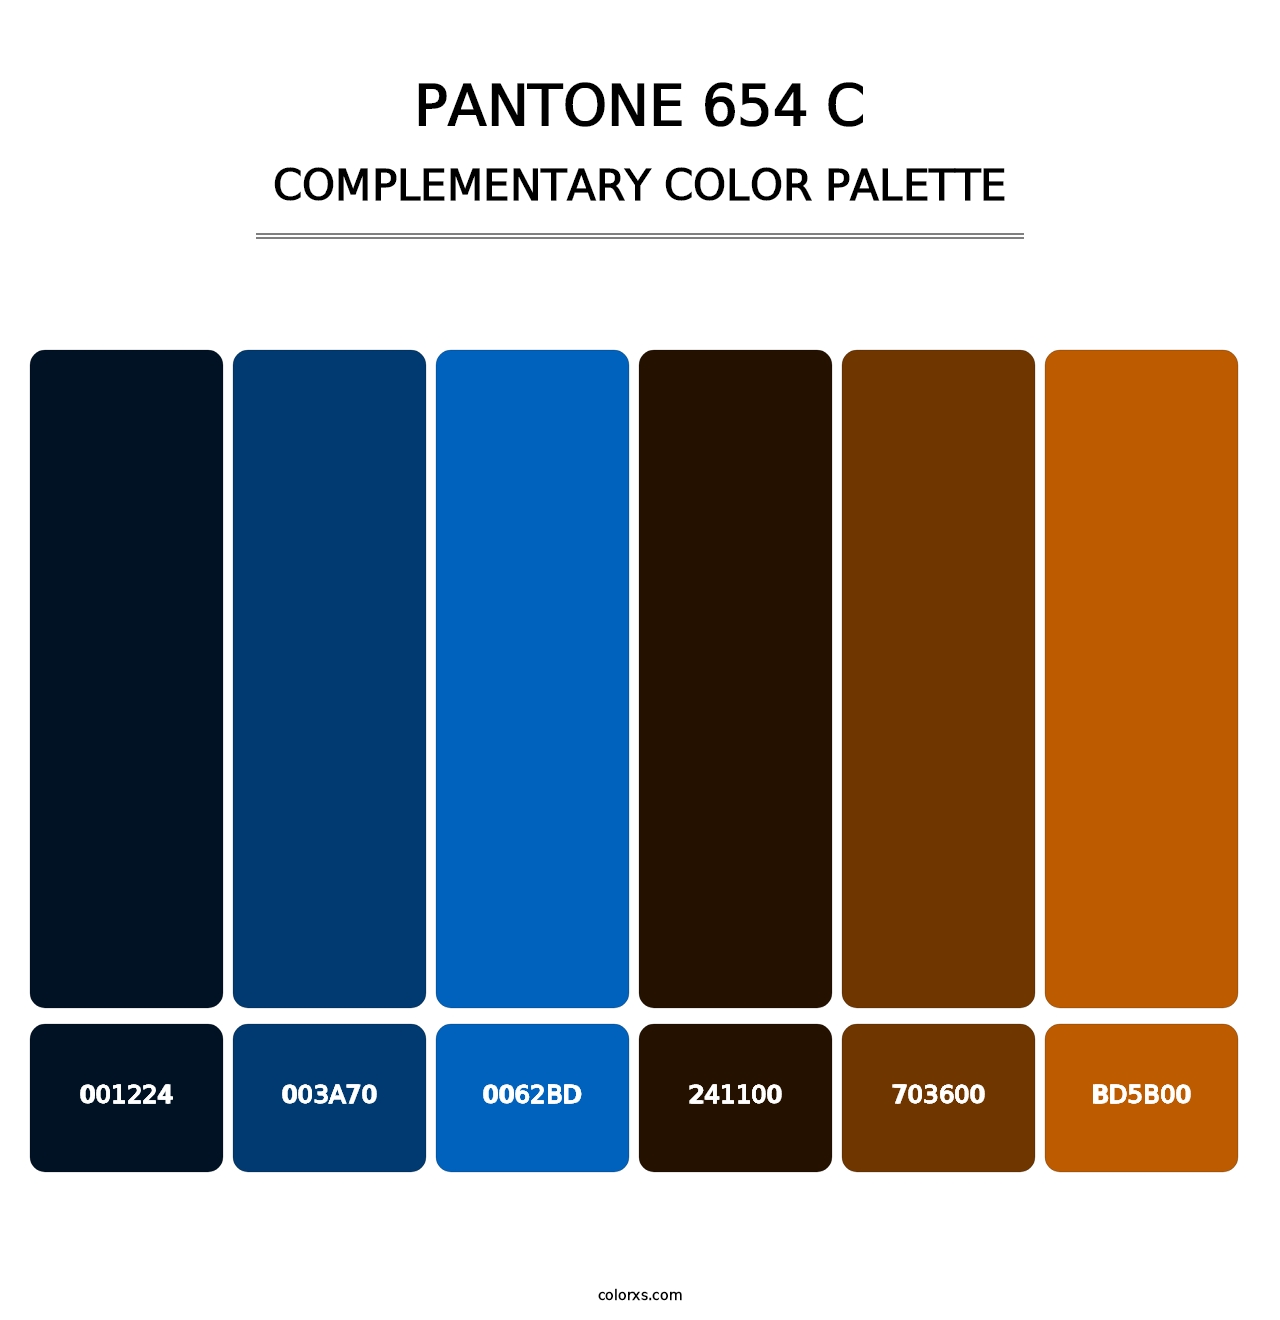 PANTONE 654 C - Complementary Color Palette